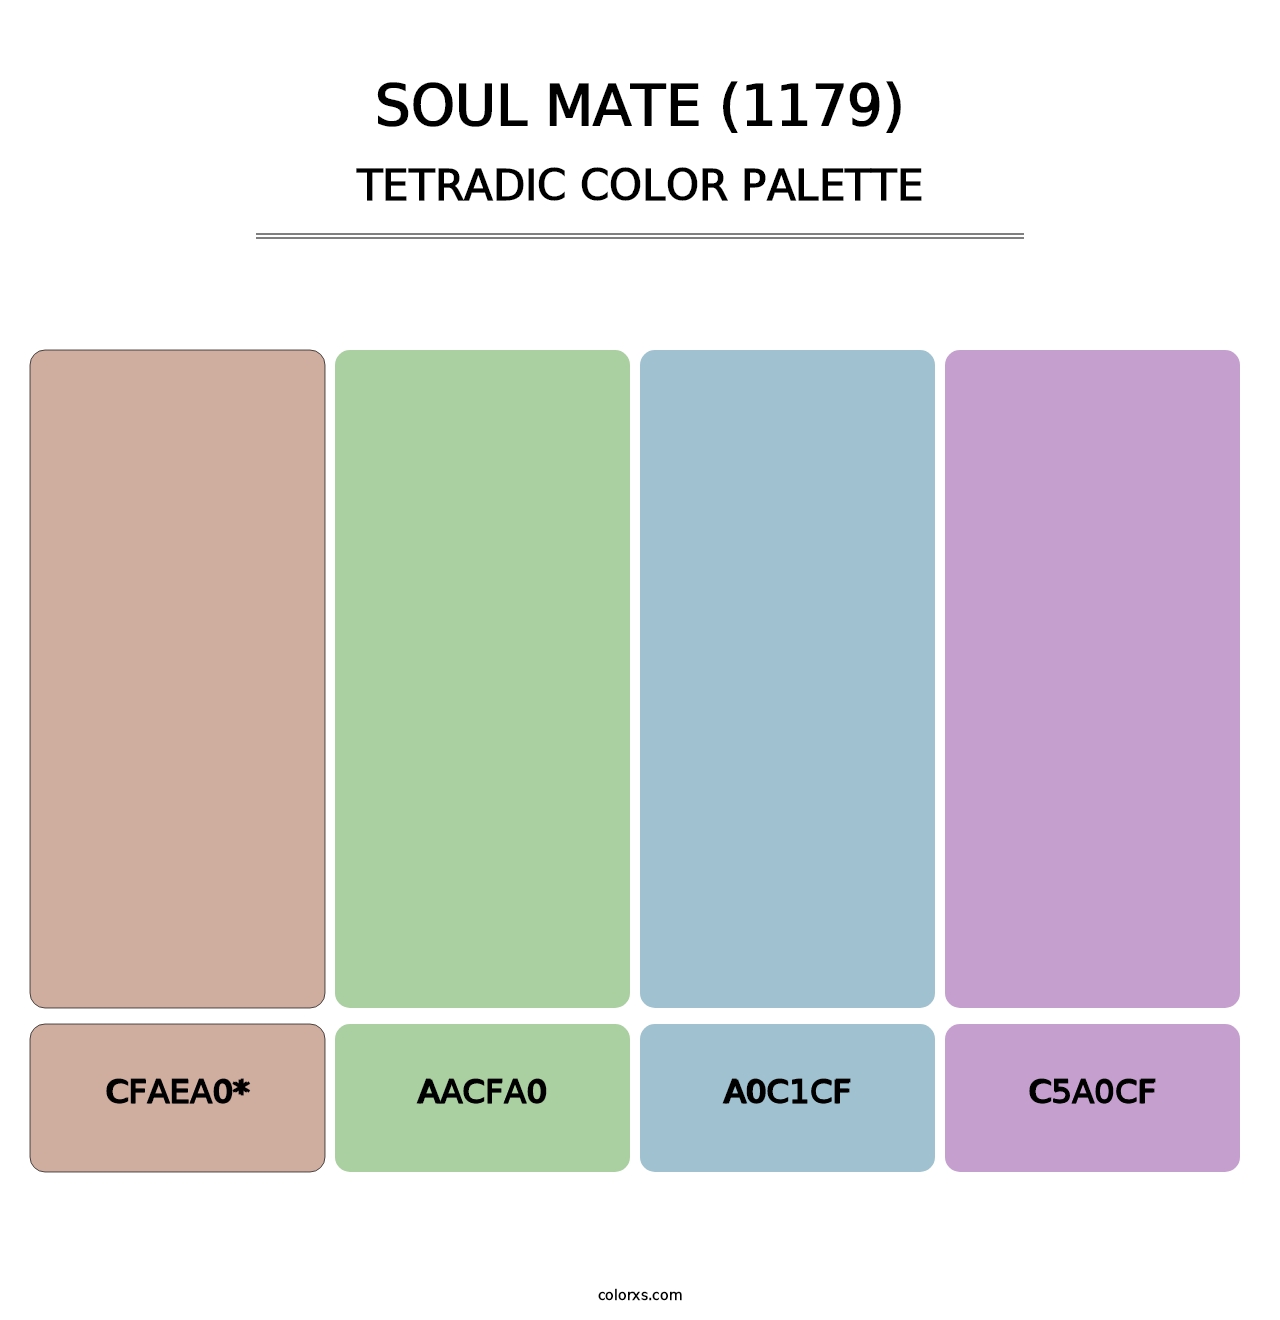 Soul Mate (1179) - Tetradic Color Palette